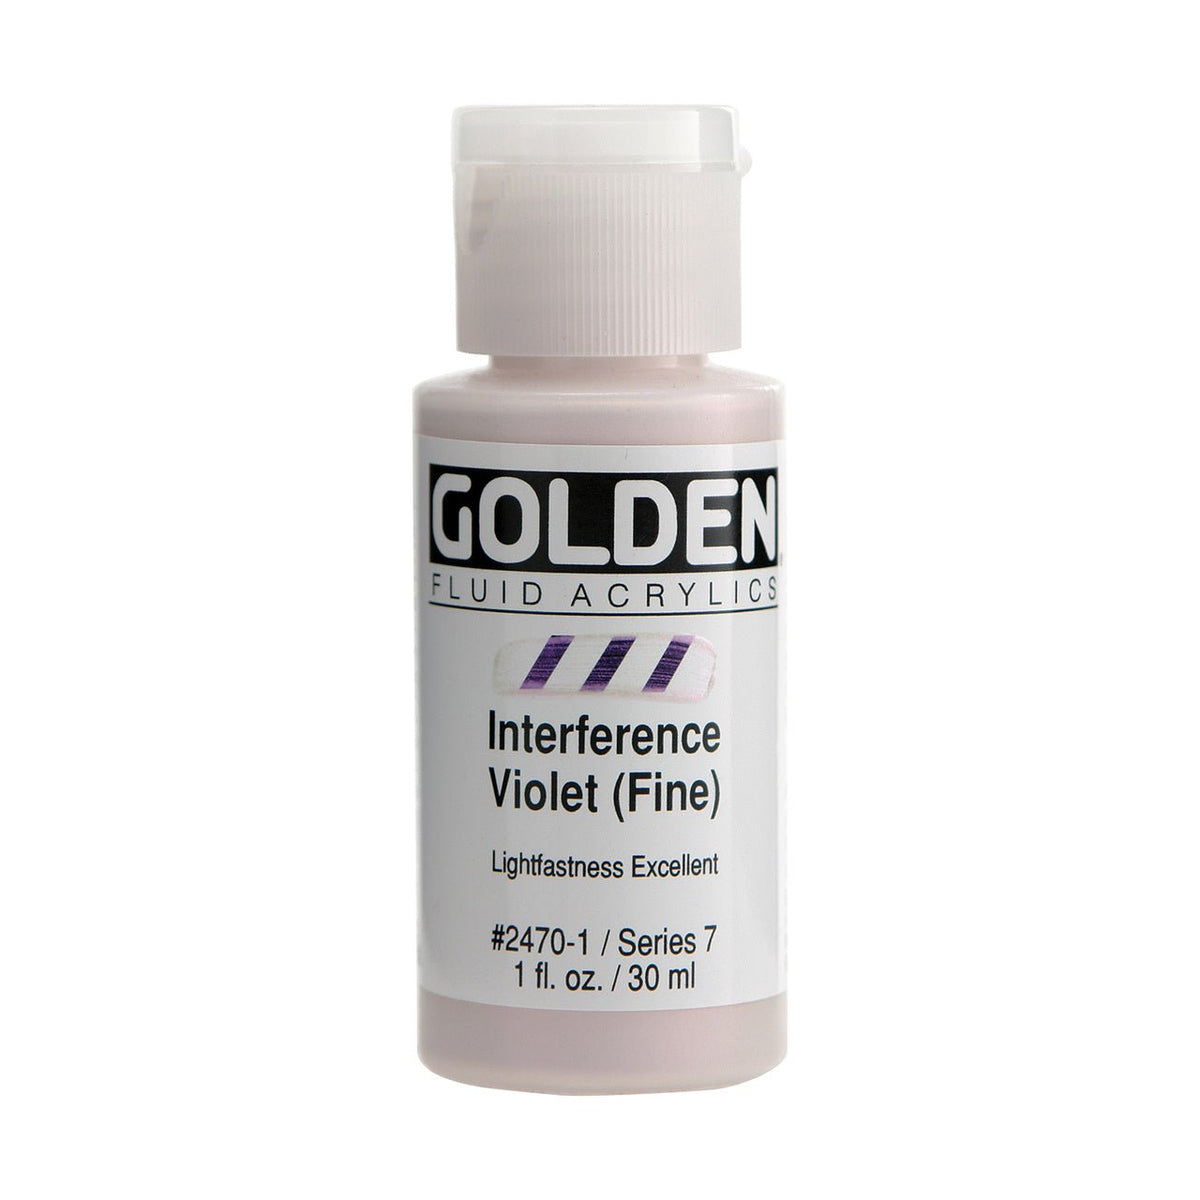 Golden Fluid Acrylic Interference Violet (fine) 1 oz - merriartist.com